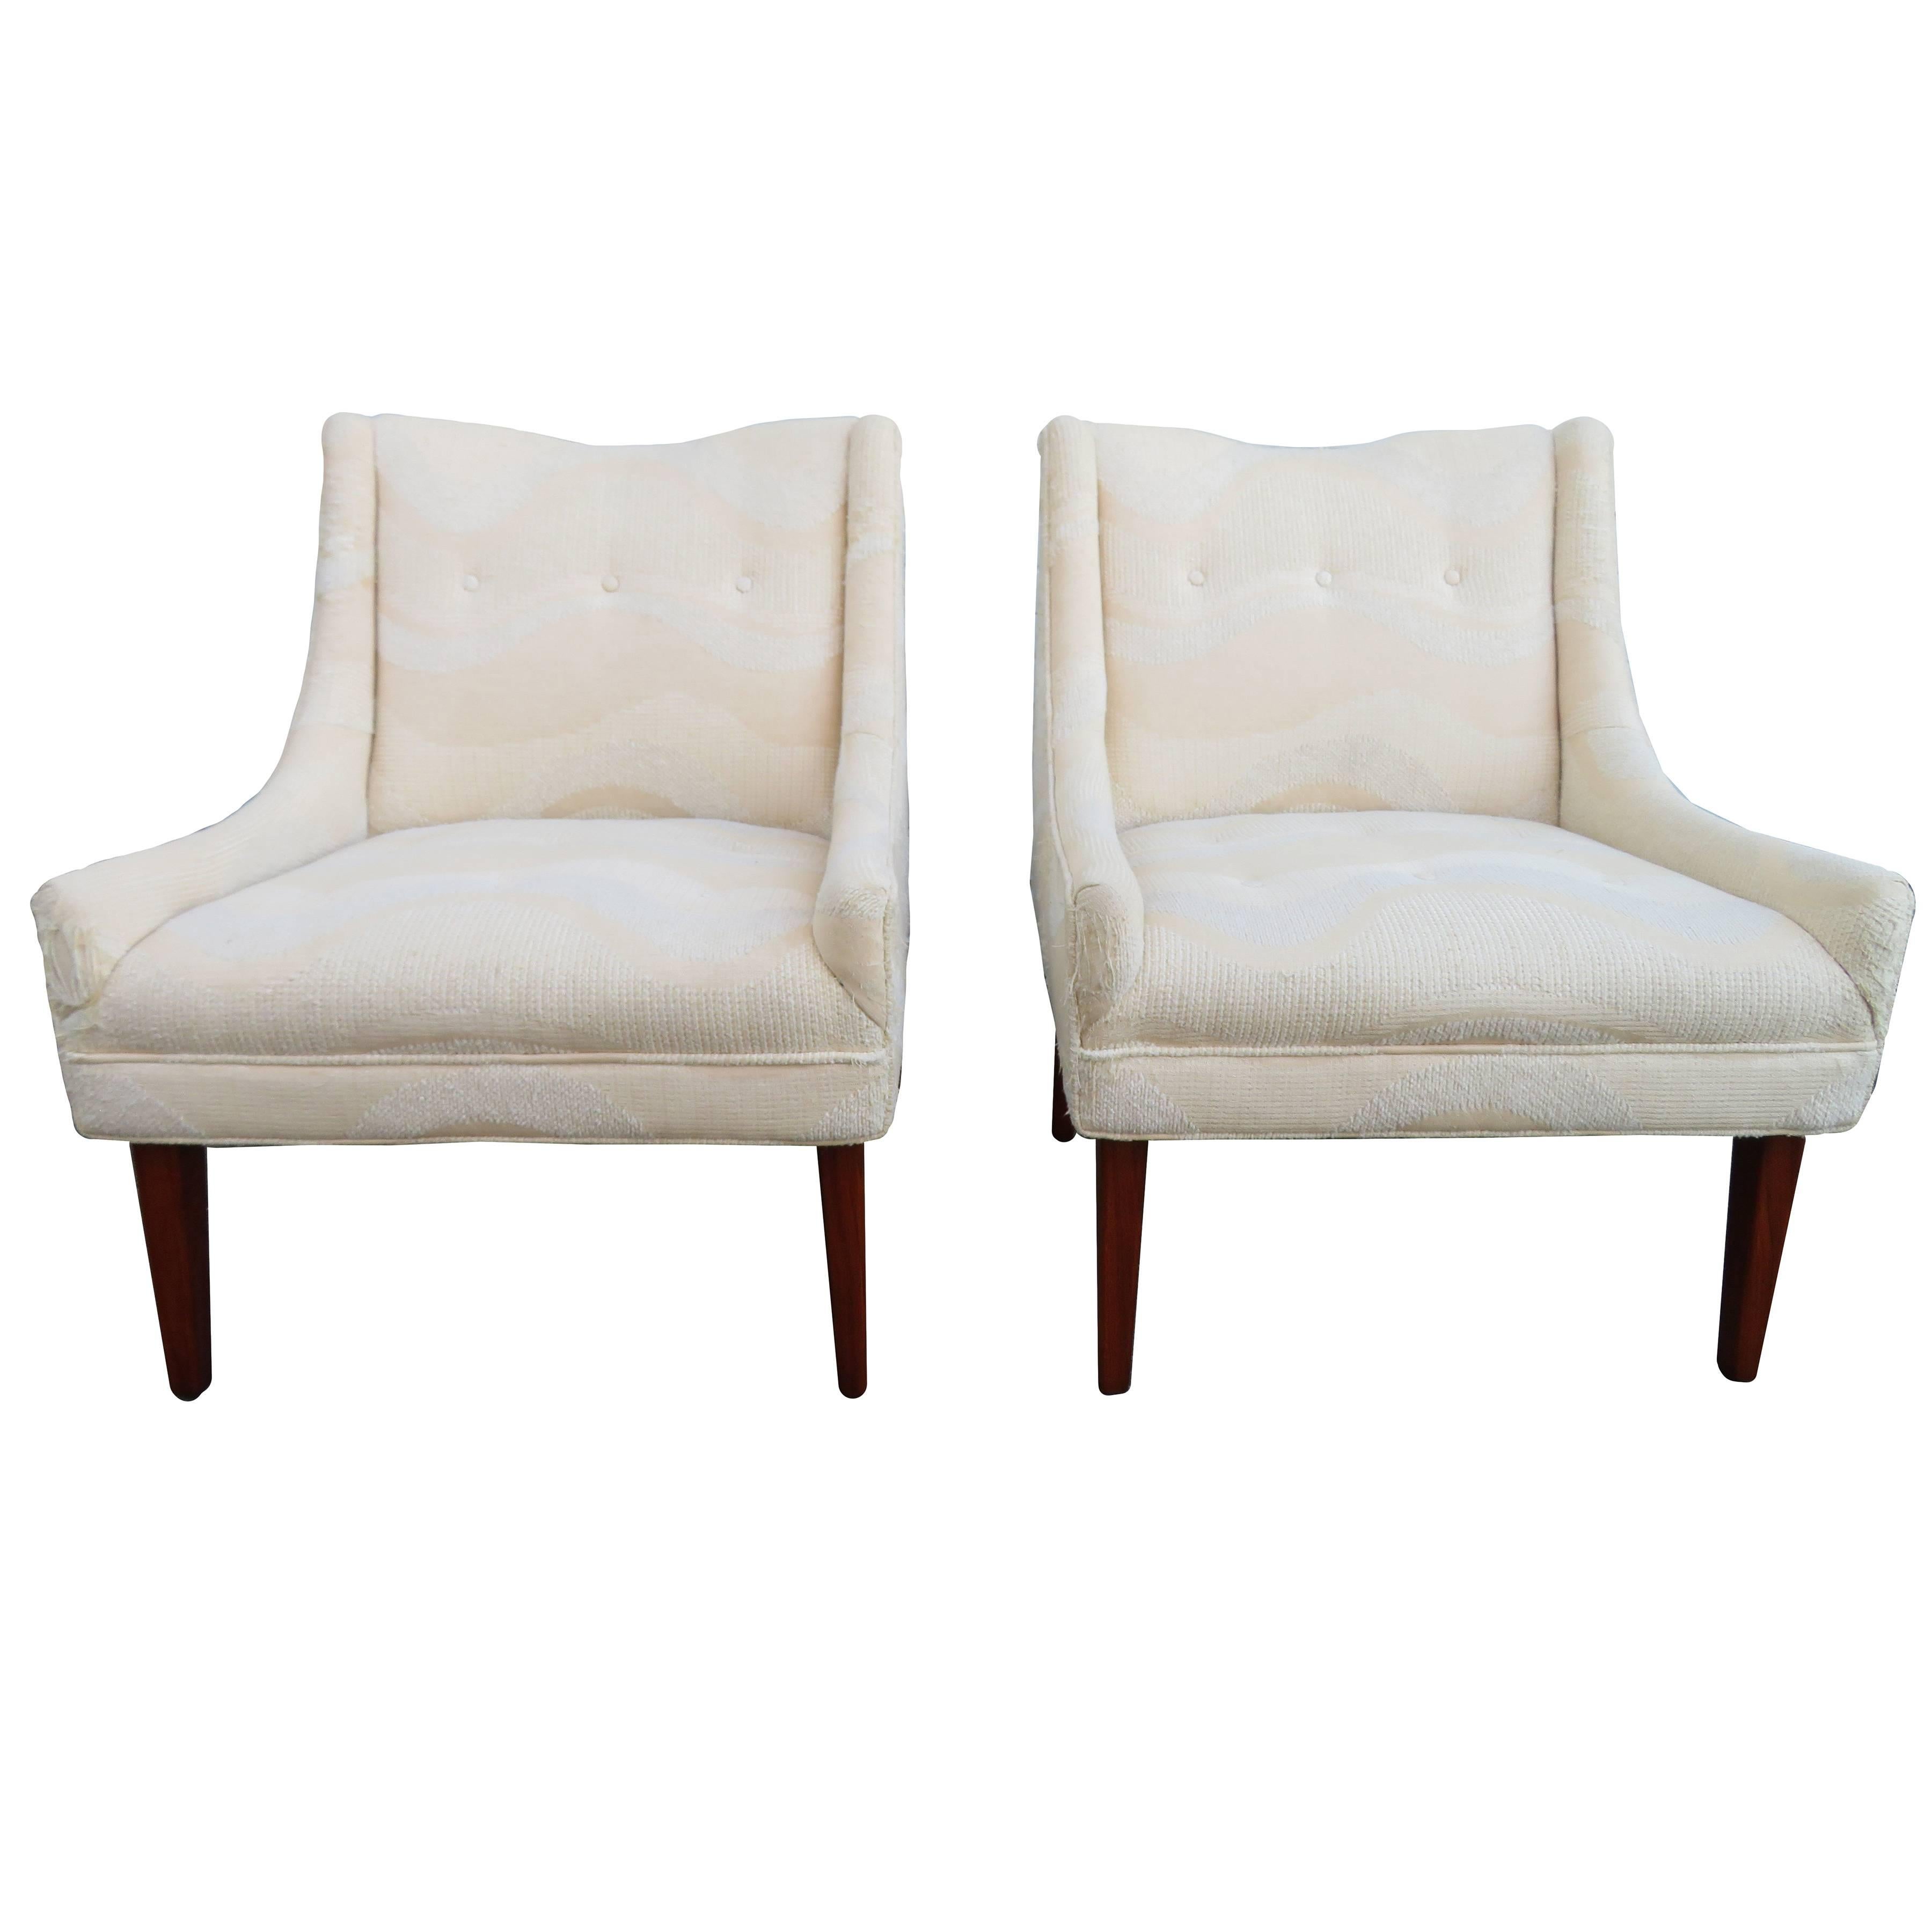 Pair of Slipper Lounge Chairs Mid-Century Modern